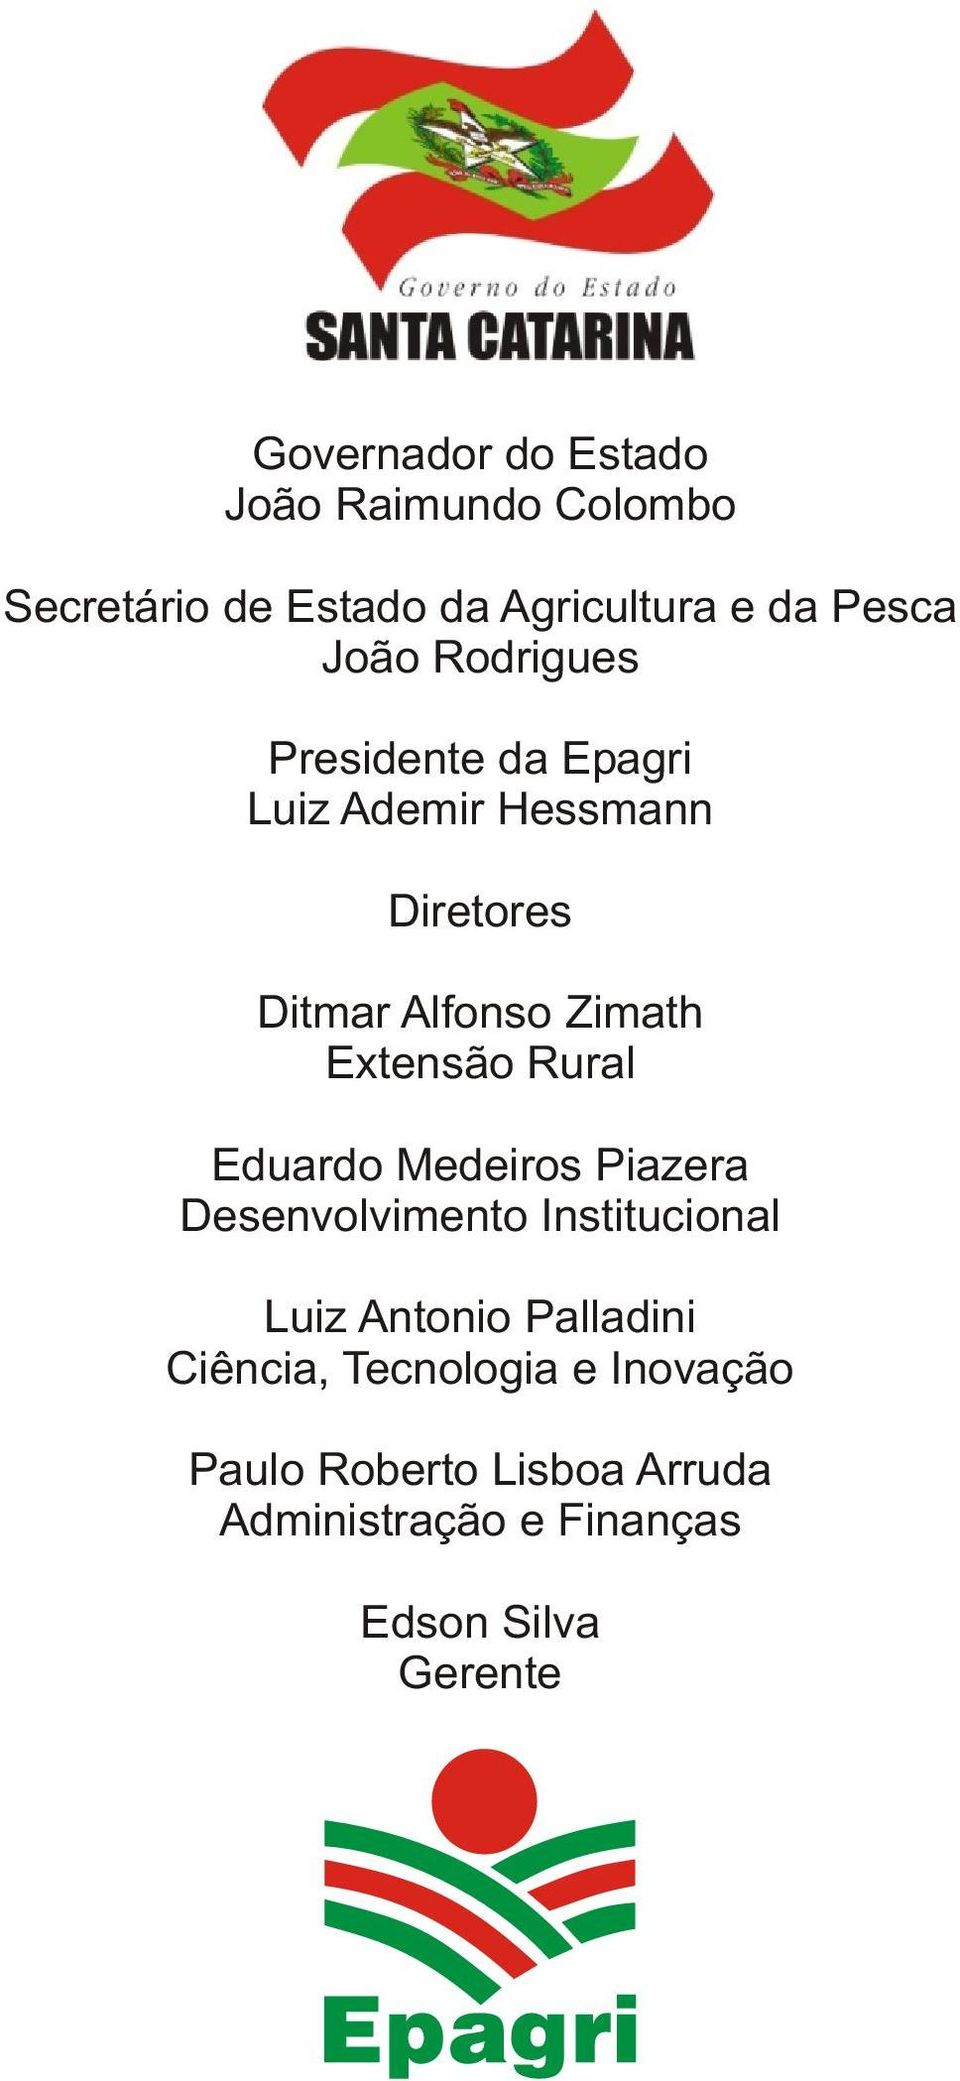 Extensão Rural Eduardo Medeiros Piazera Desenvolvimento Institucional Luiz Antonio Palladini